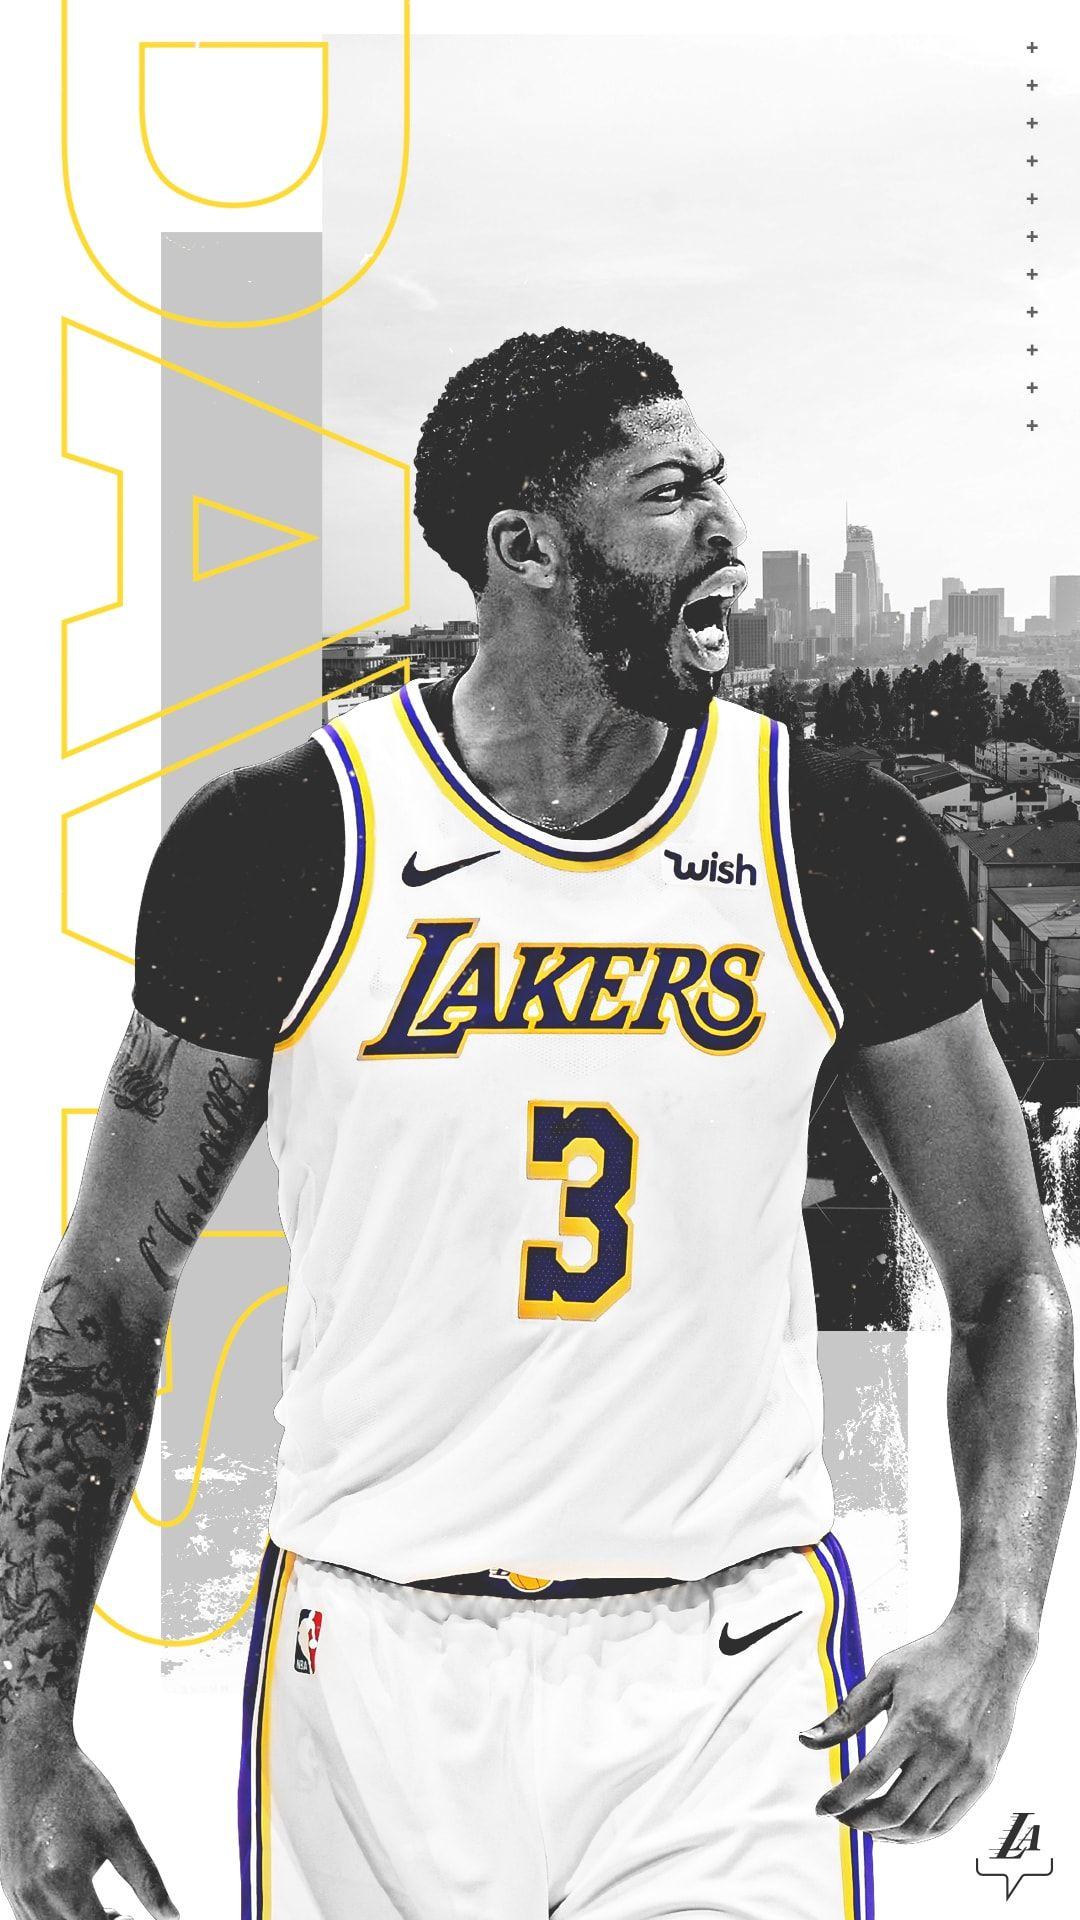 Wallpaper Lebron James and Anthony Davis Los Angeles Lakers 201920 Nba  Season Miami Heat Basketball Background  Download Free Image